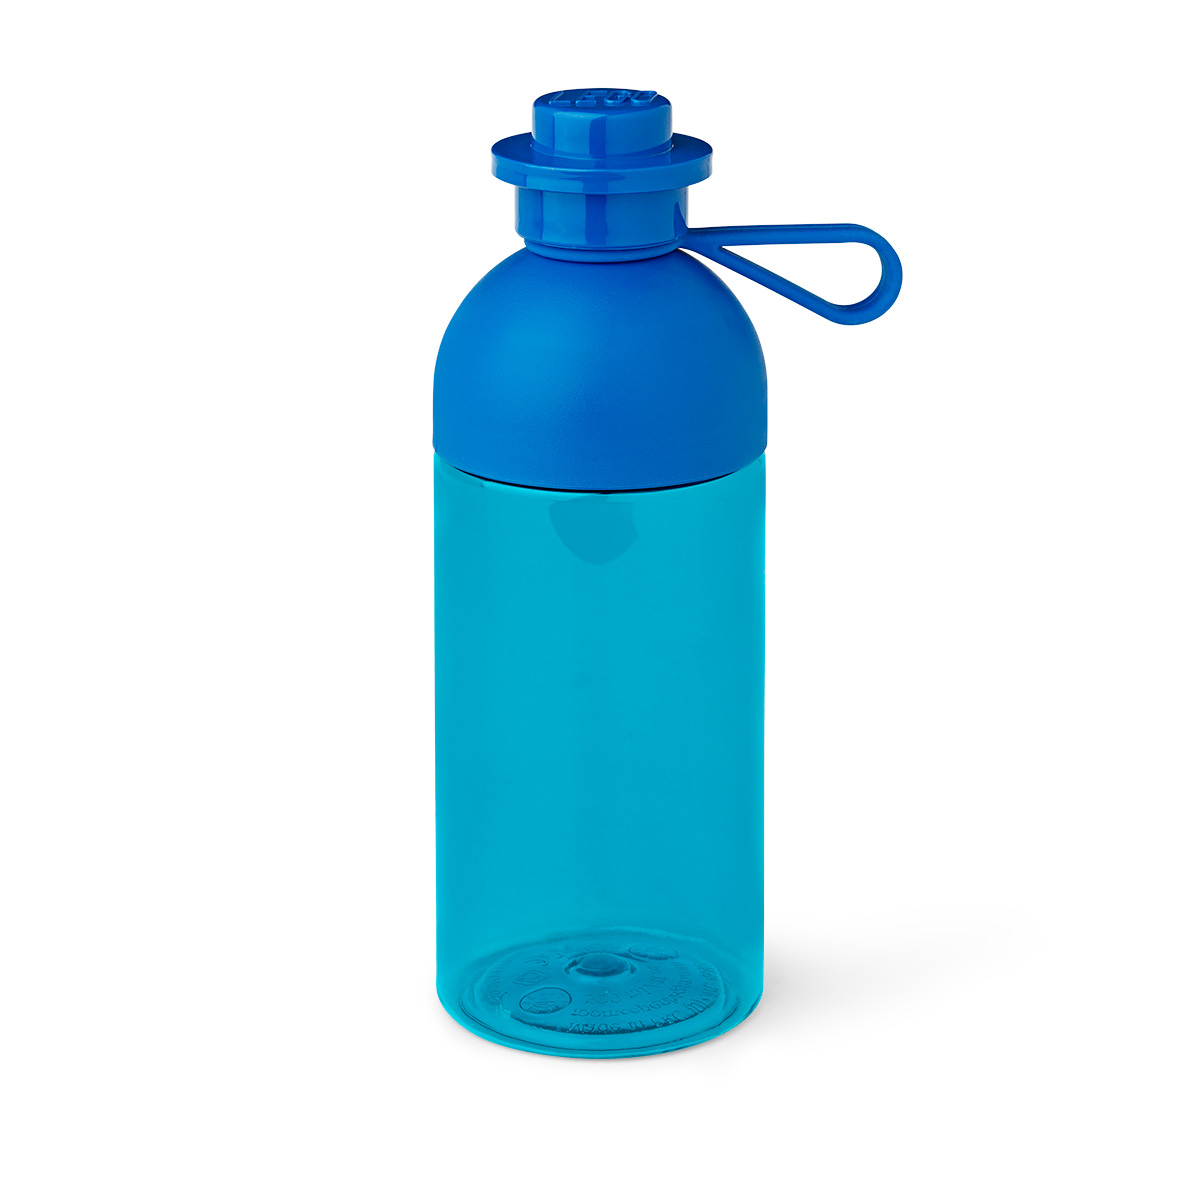 https://nh-g.com/wp-content/uploads/2022/05/4042-LEGO-Hydration-Bottle-Blue.jpg